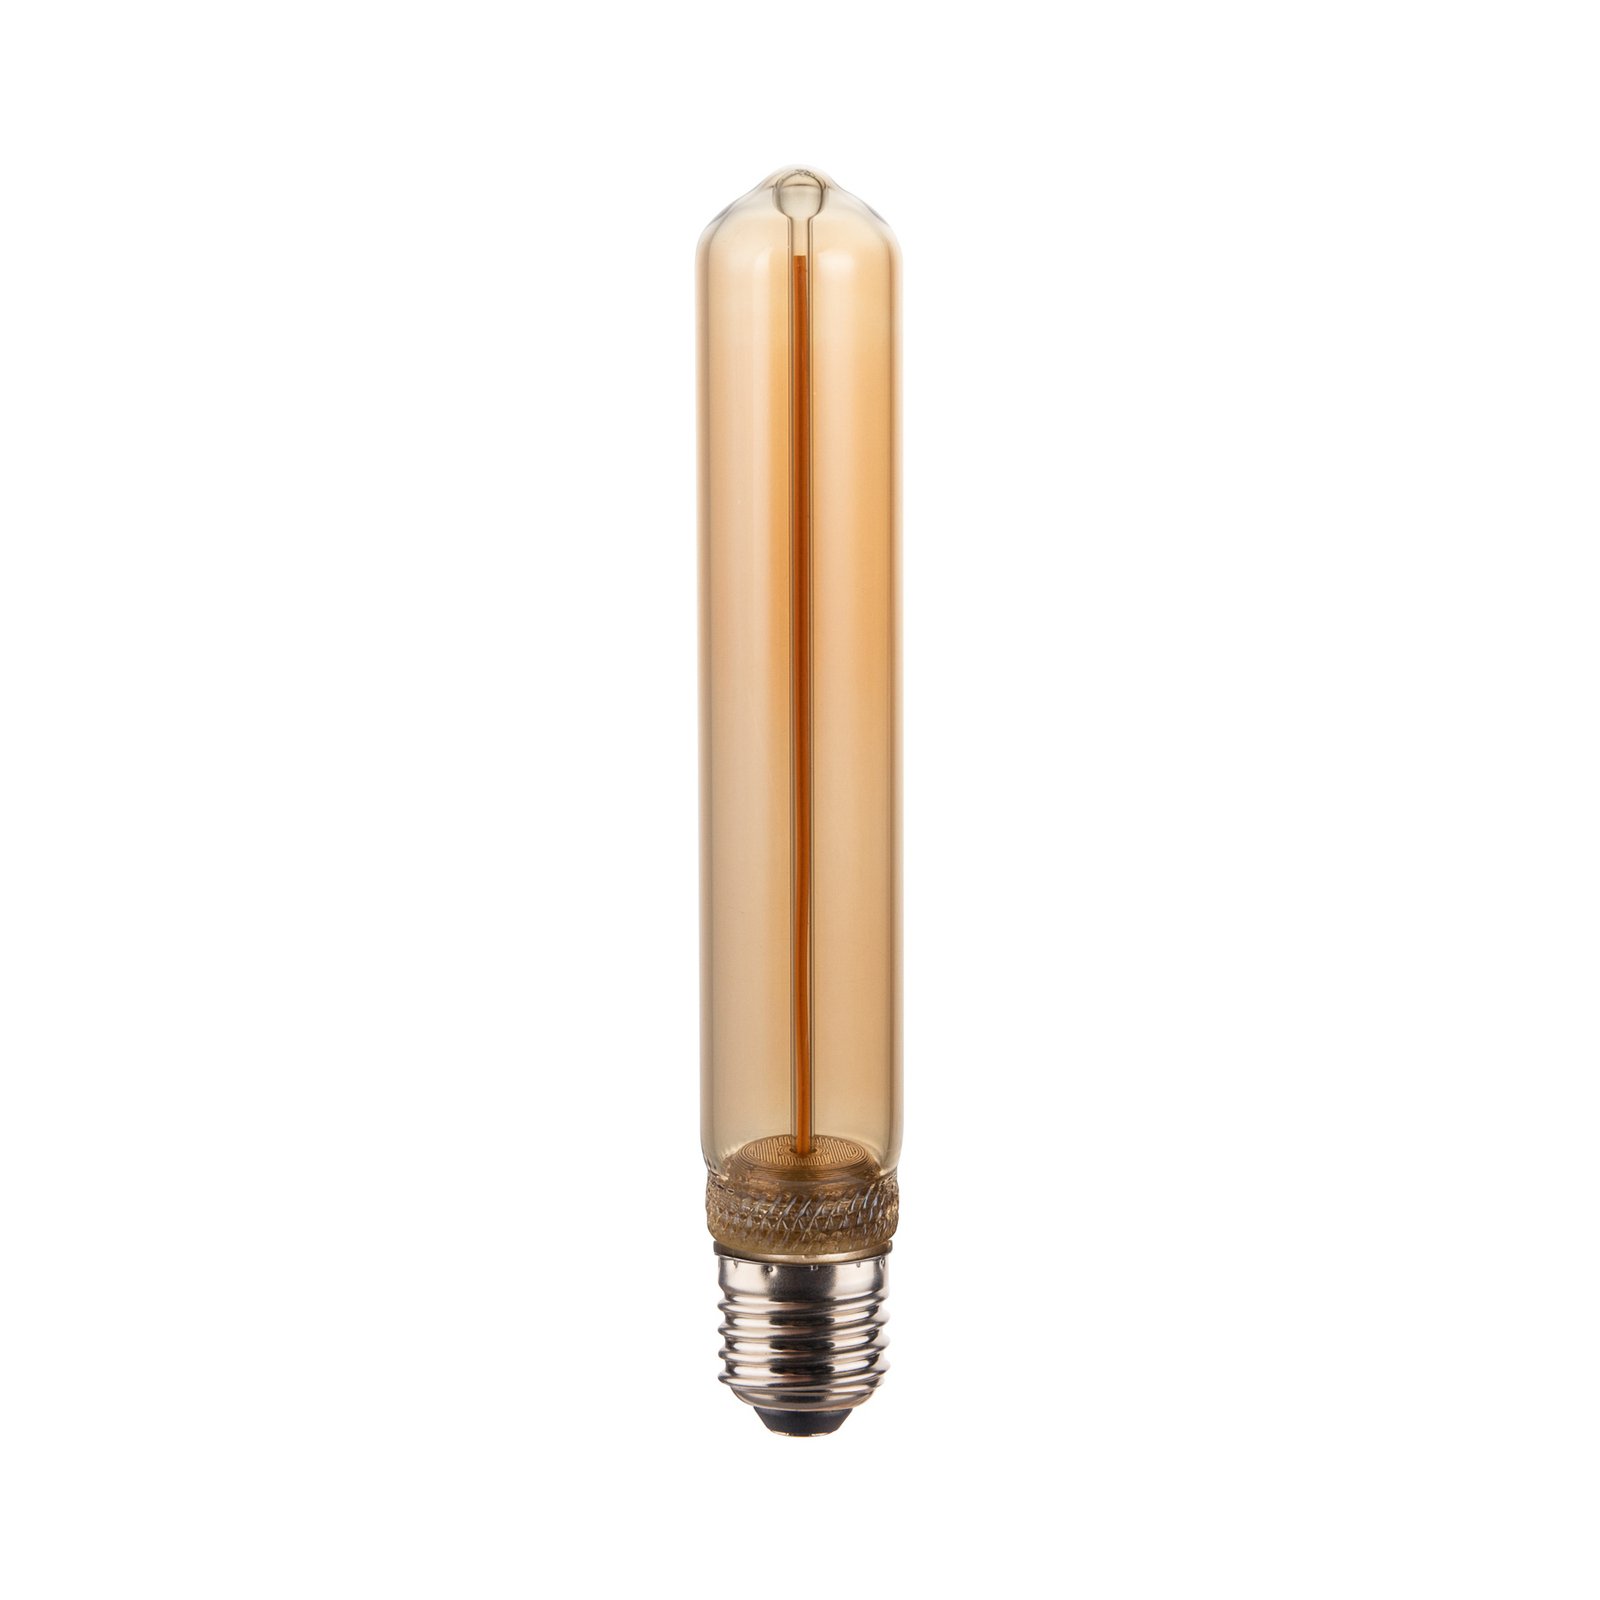 PR Home Edge LED bulb E27 gold 2W 1,800K dimmable T30